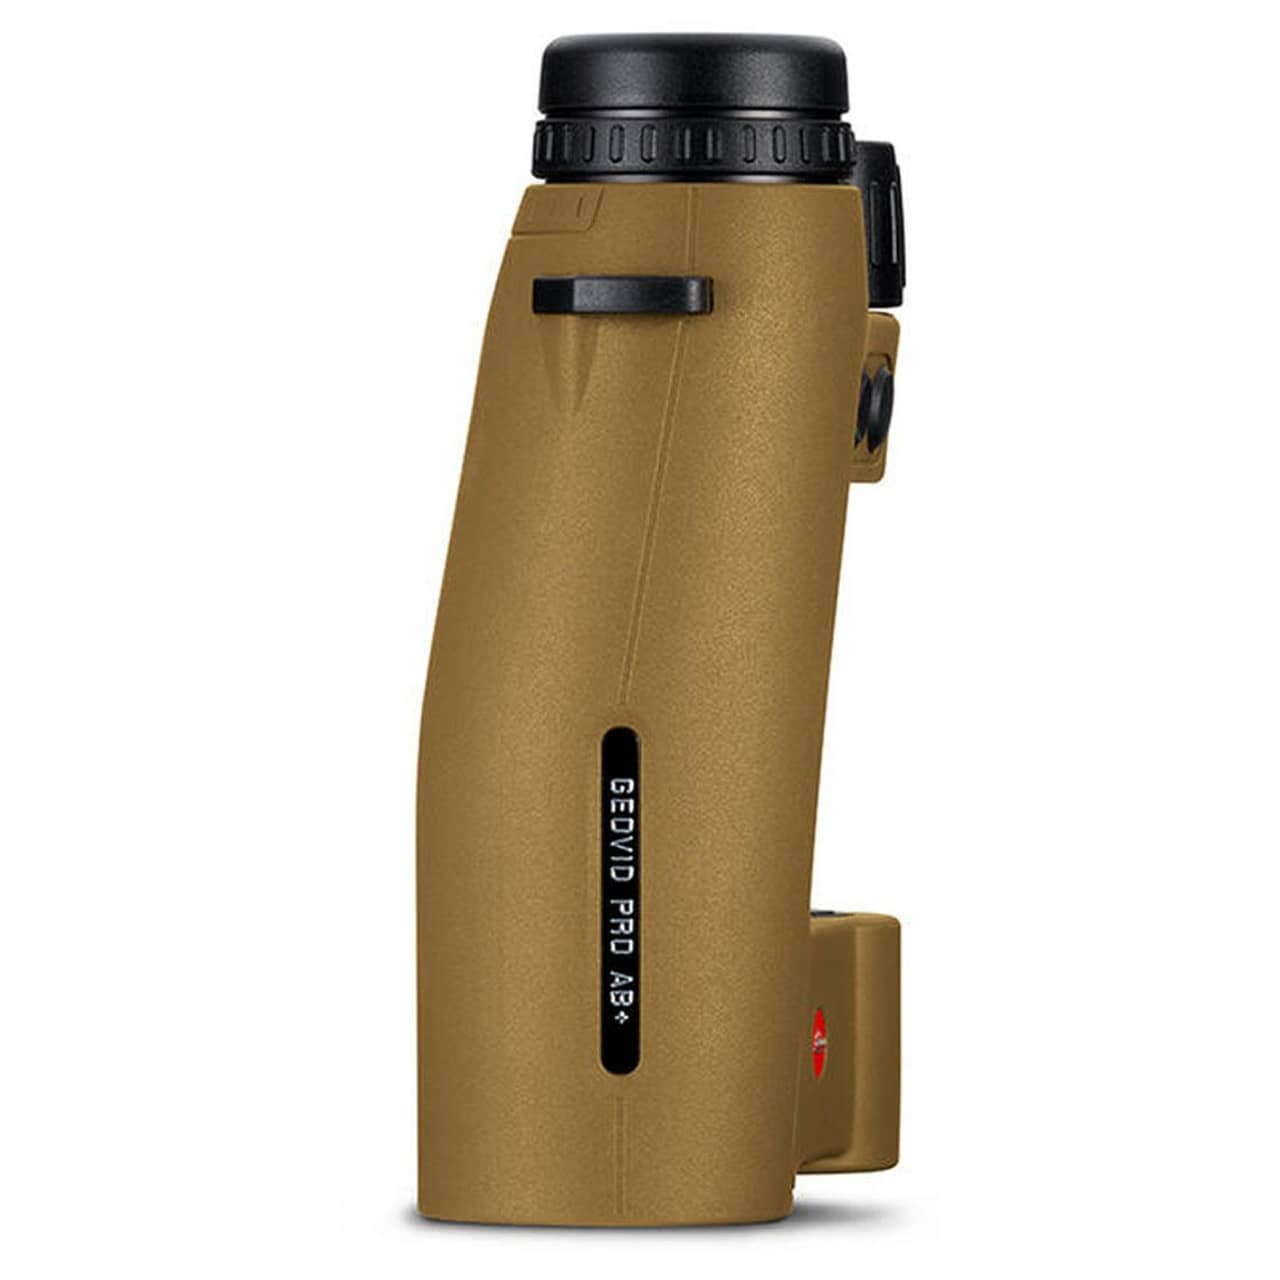 Leica® Geovid™ Pro 10x42 AB+ Rangefinding Binocular